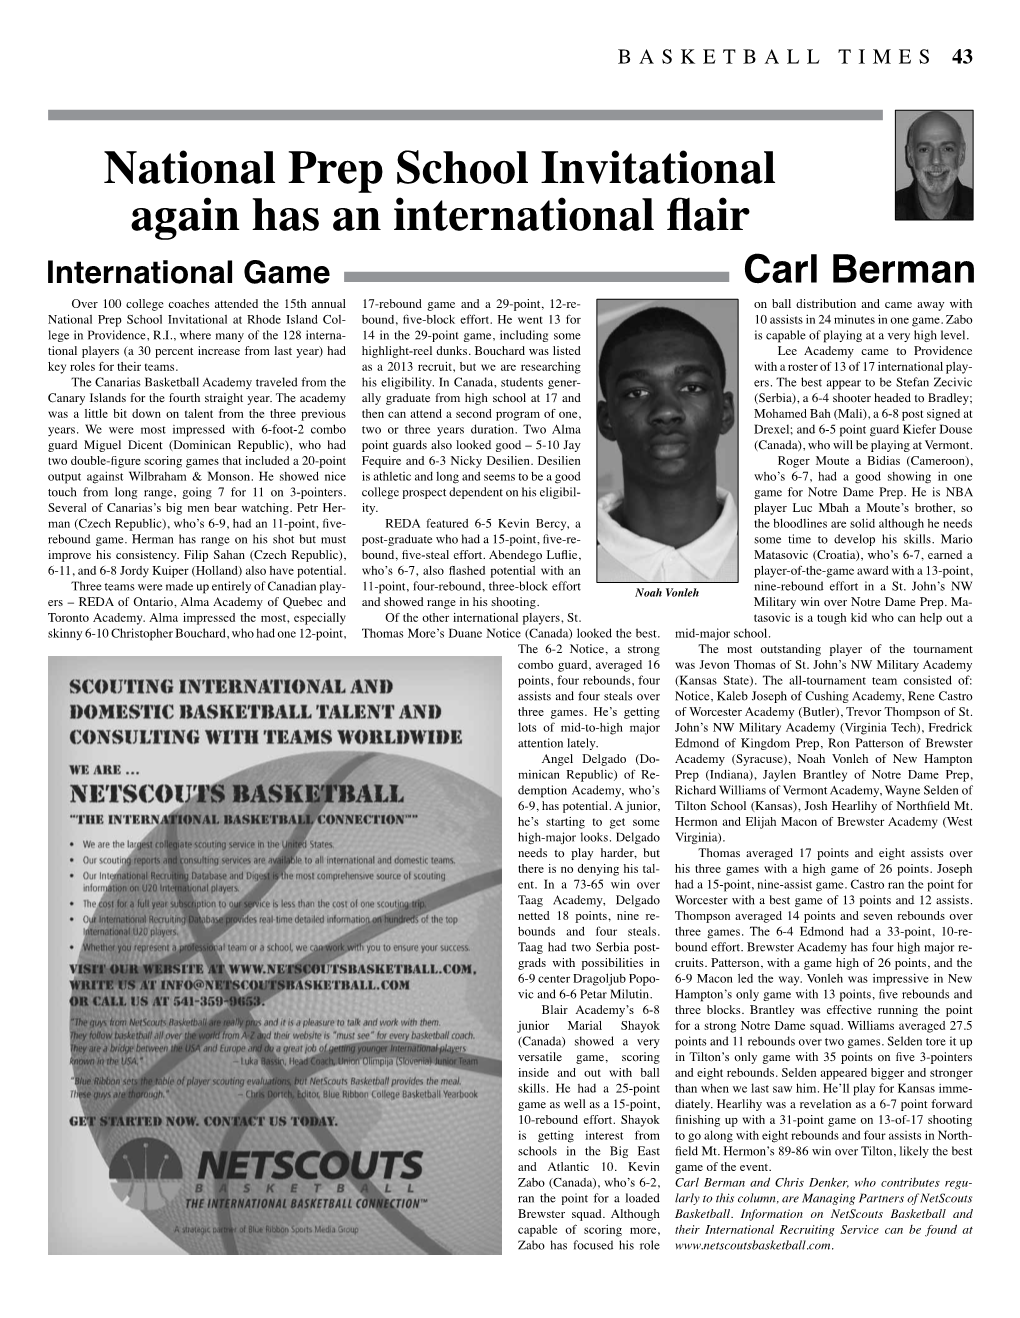 Basketball Times Column on the 2013 NPSI